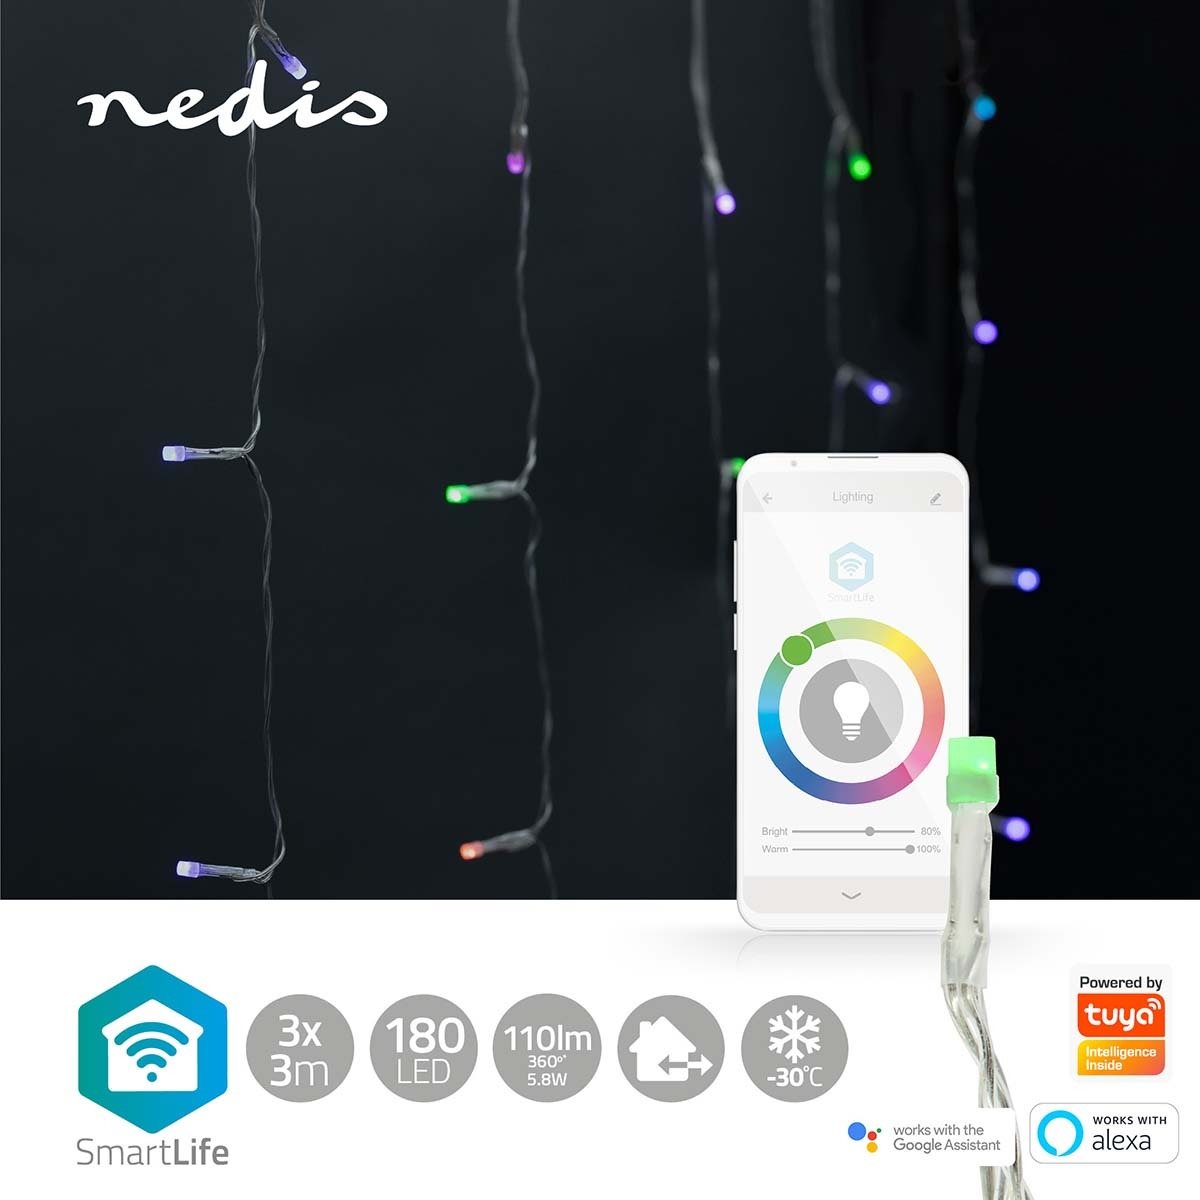 Lichterkette NEDIS Wi-Fi smarte dekorative LED-Lichterkette WIFILXC01C180 ...